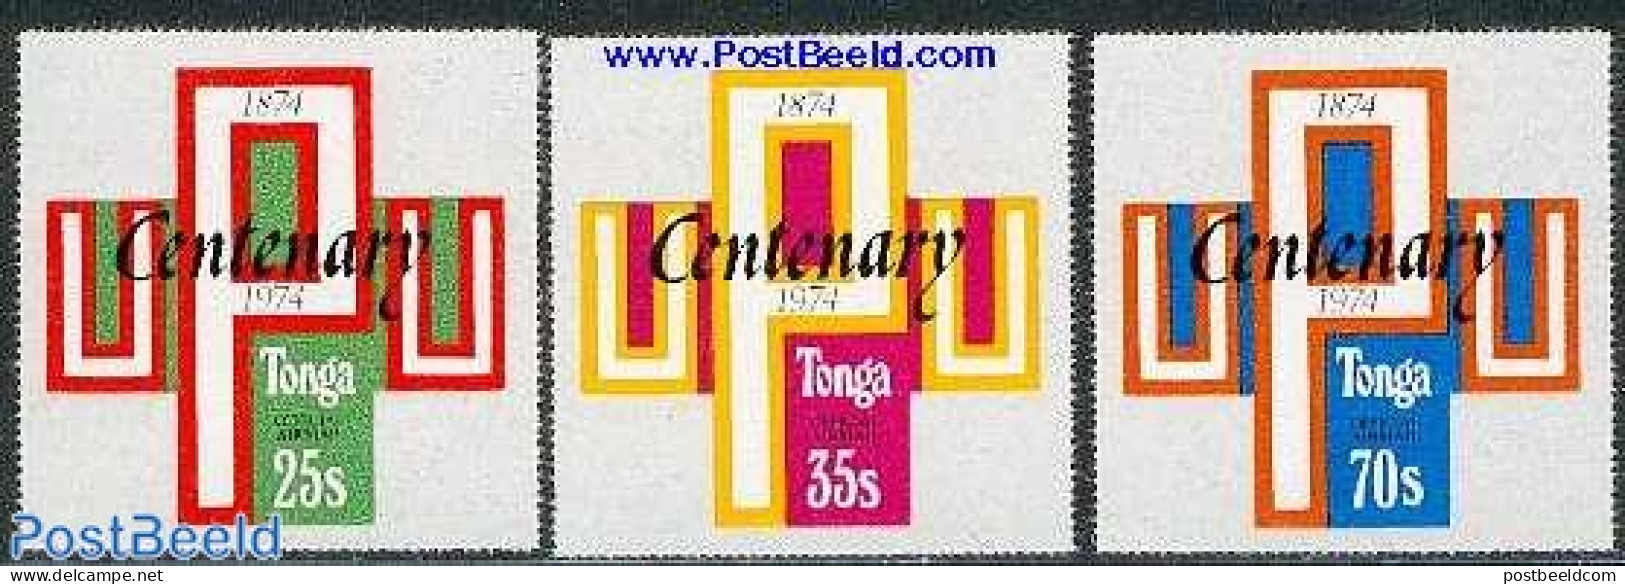 Tonga 1974 On Service, UPU Centenary 3v, Mint NH, U.P.U. - U.P.U.